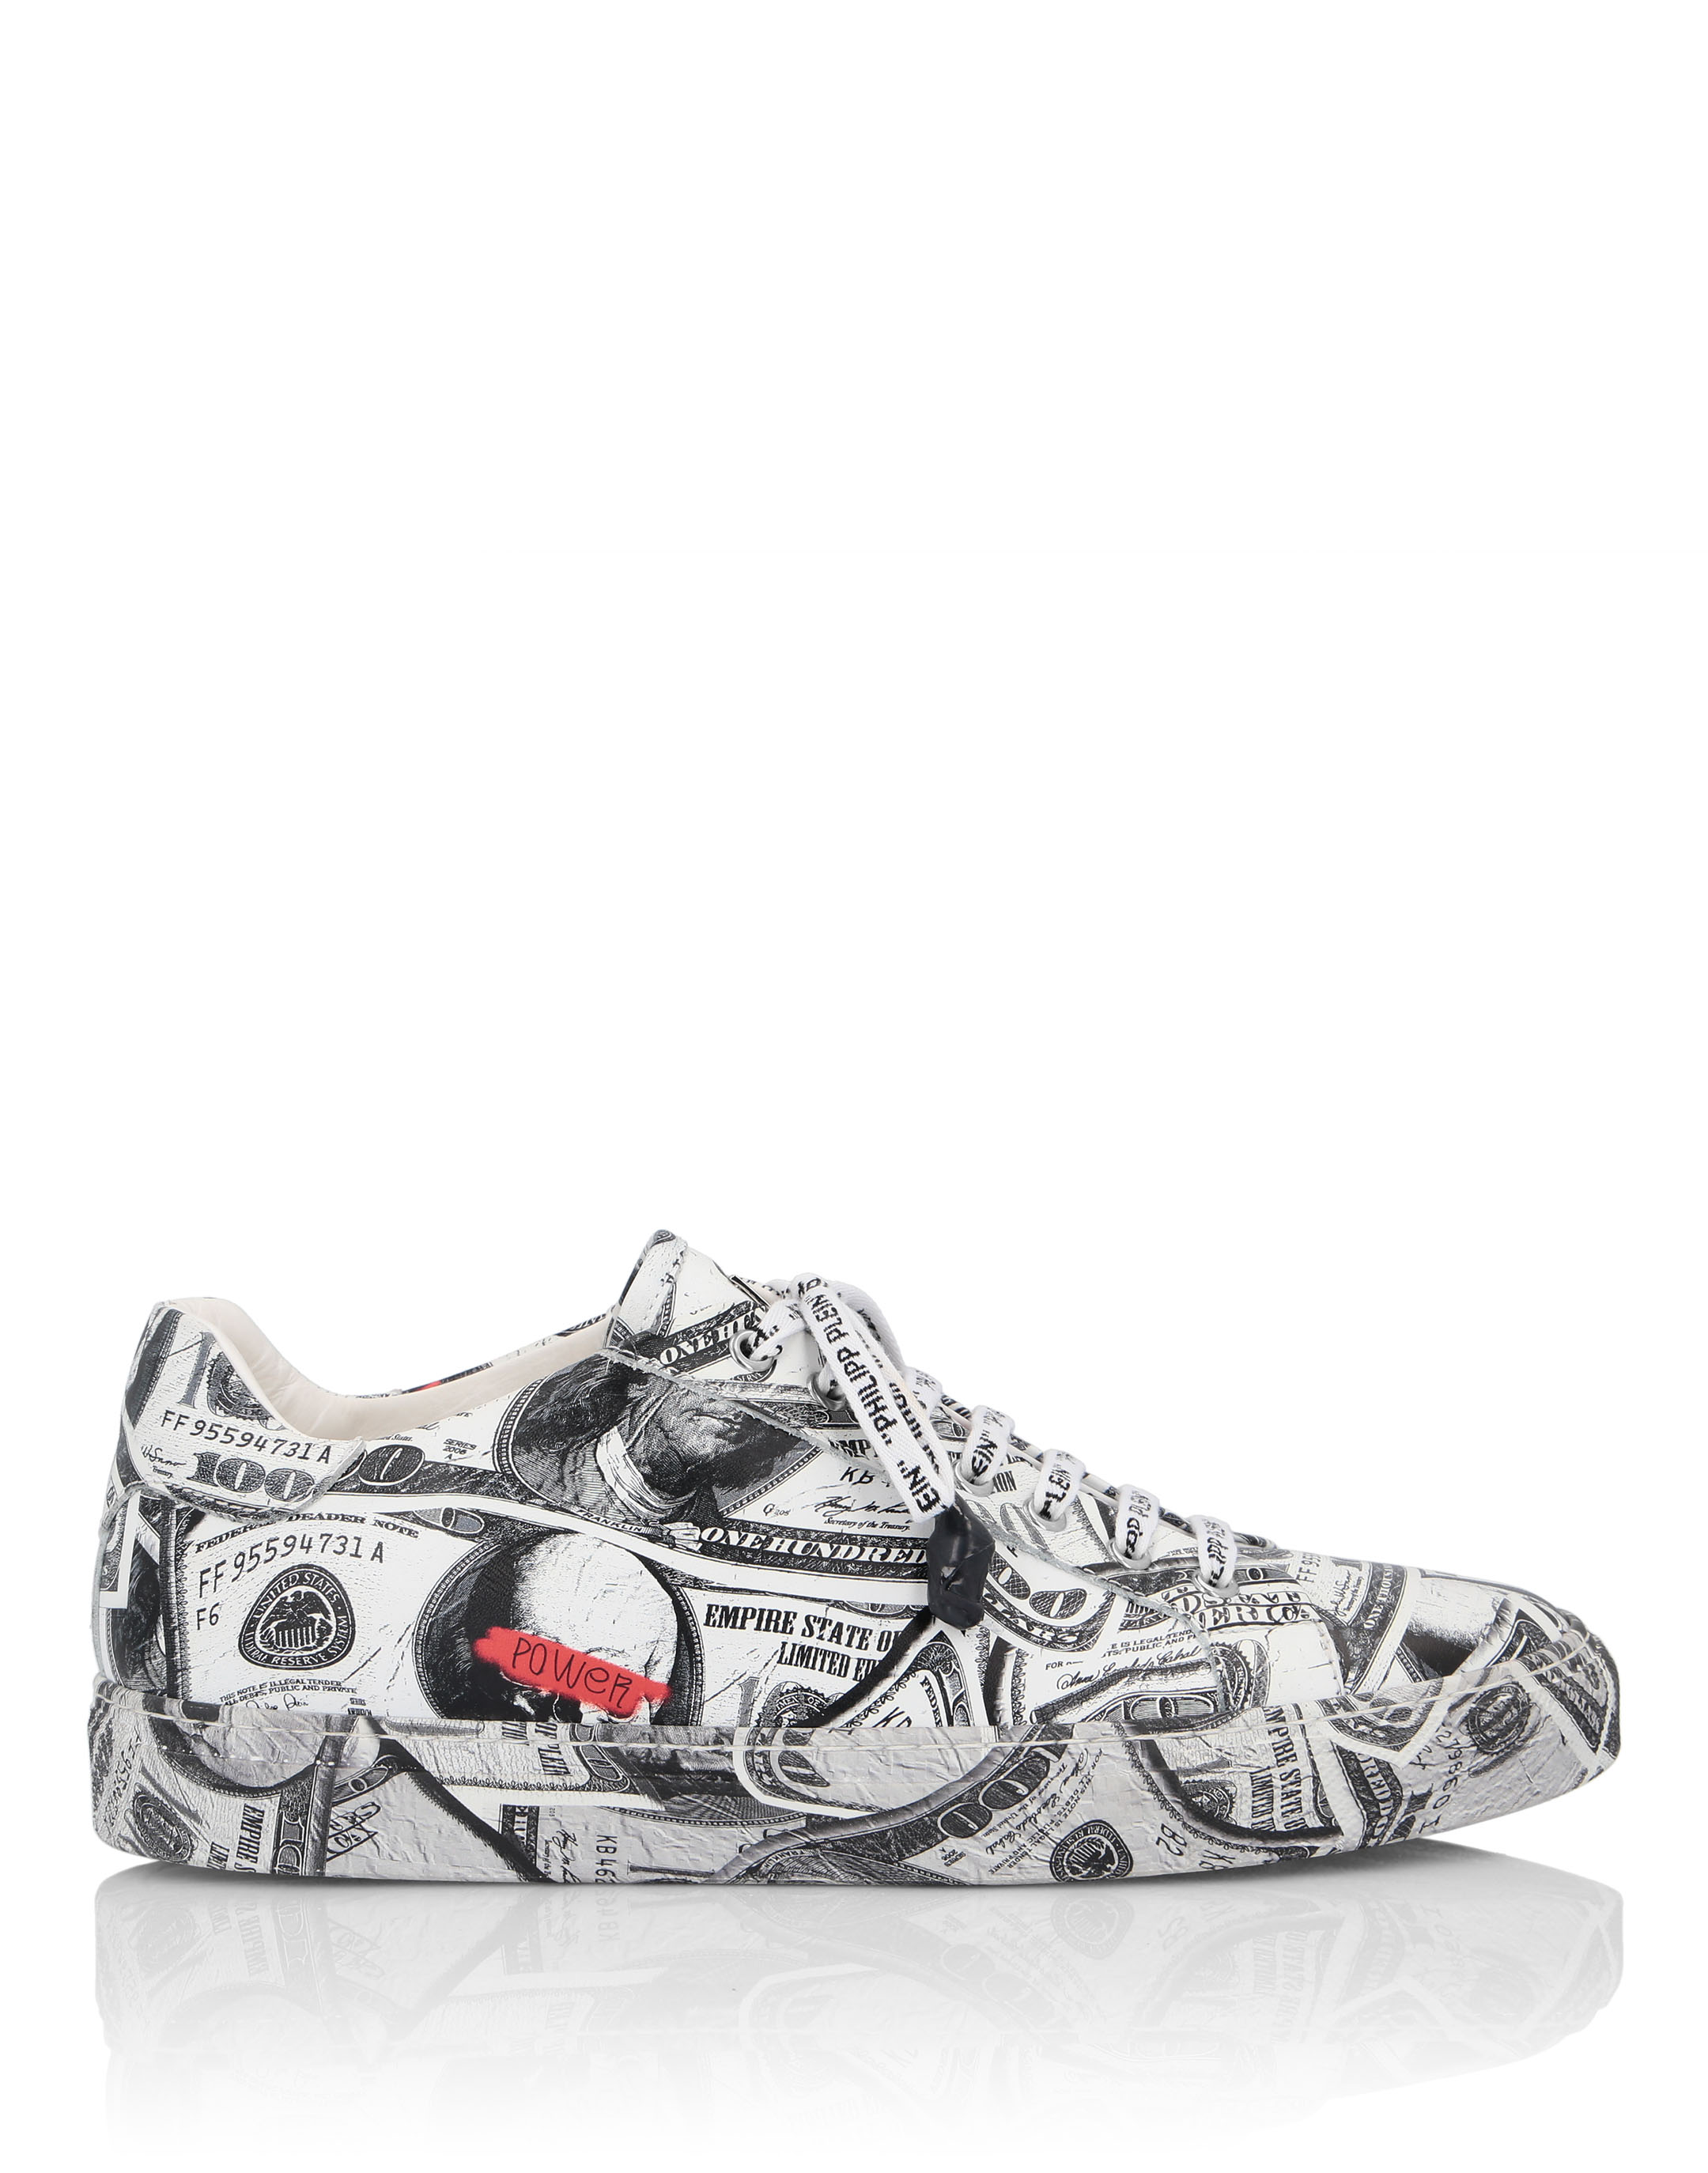 LoTop Sneakers Dollar | Philipp Plein 